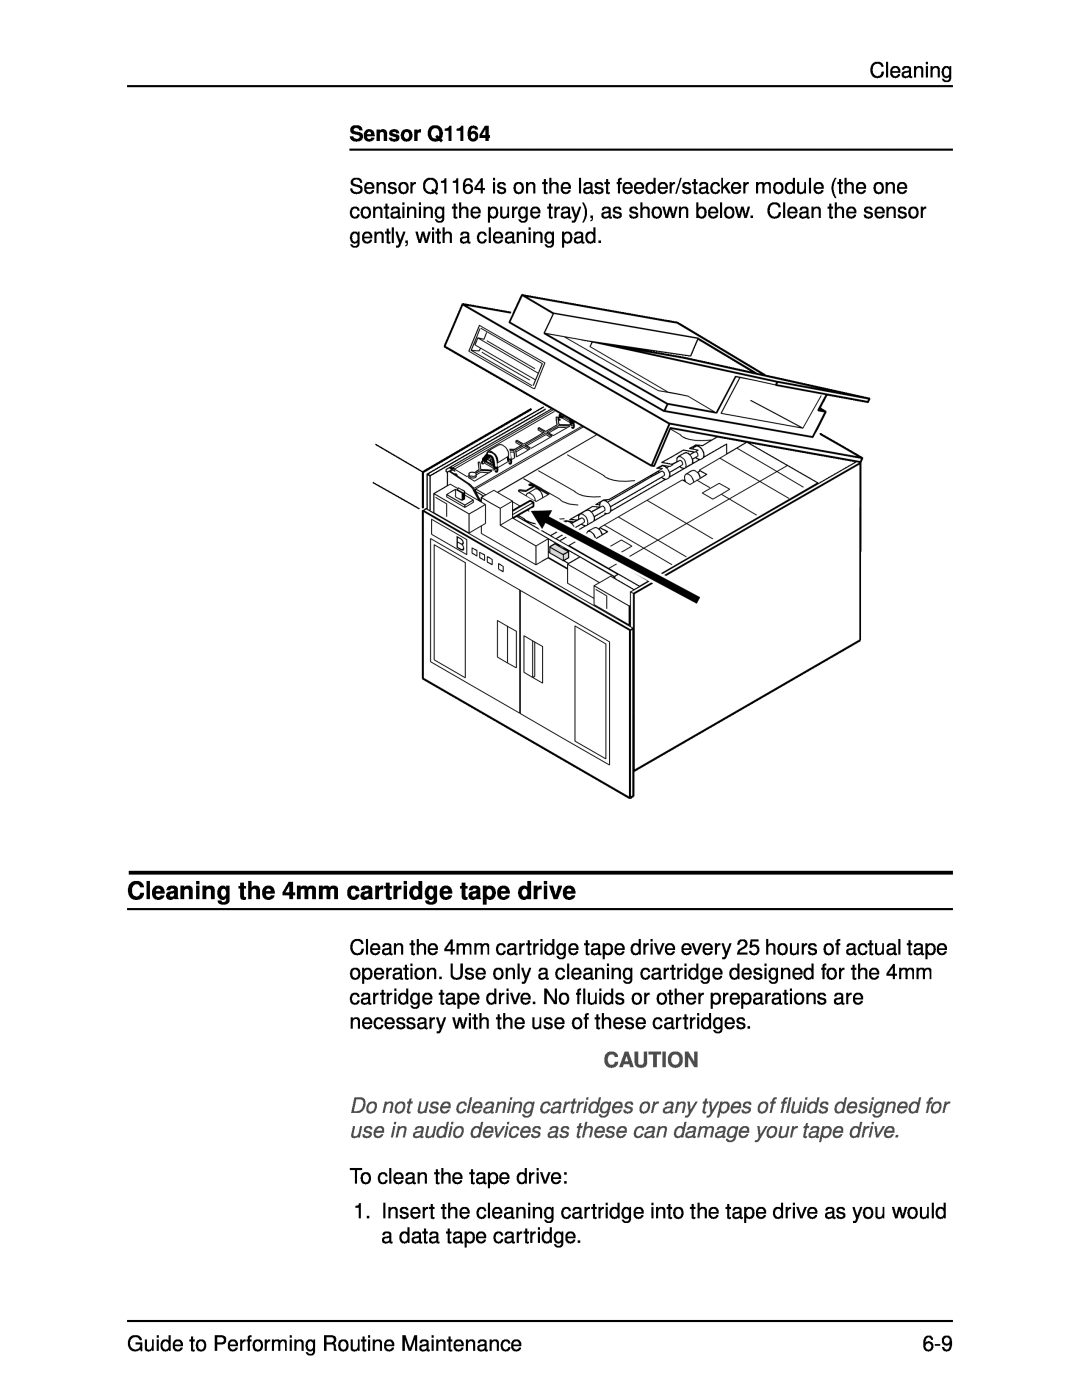 Xerox DocuPrint 96 manual Cleaning the 4mm cartridge tape drive, Sensor Q1164 